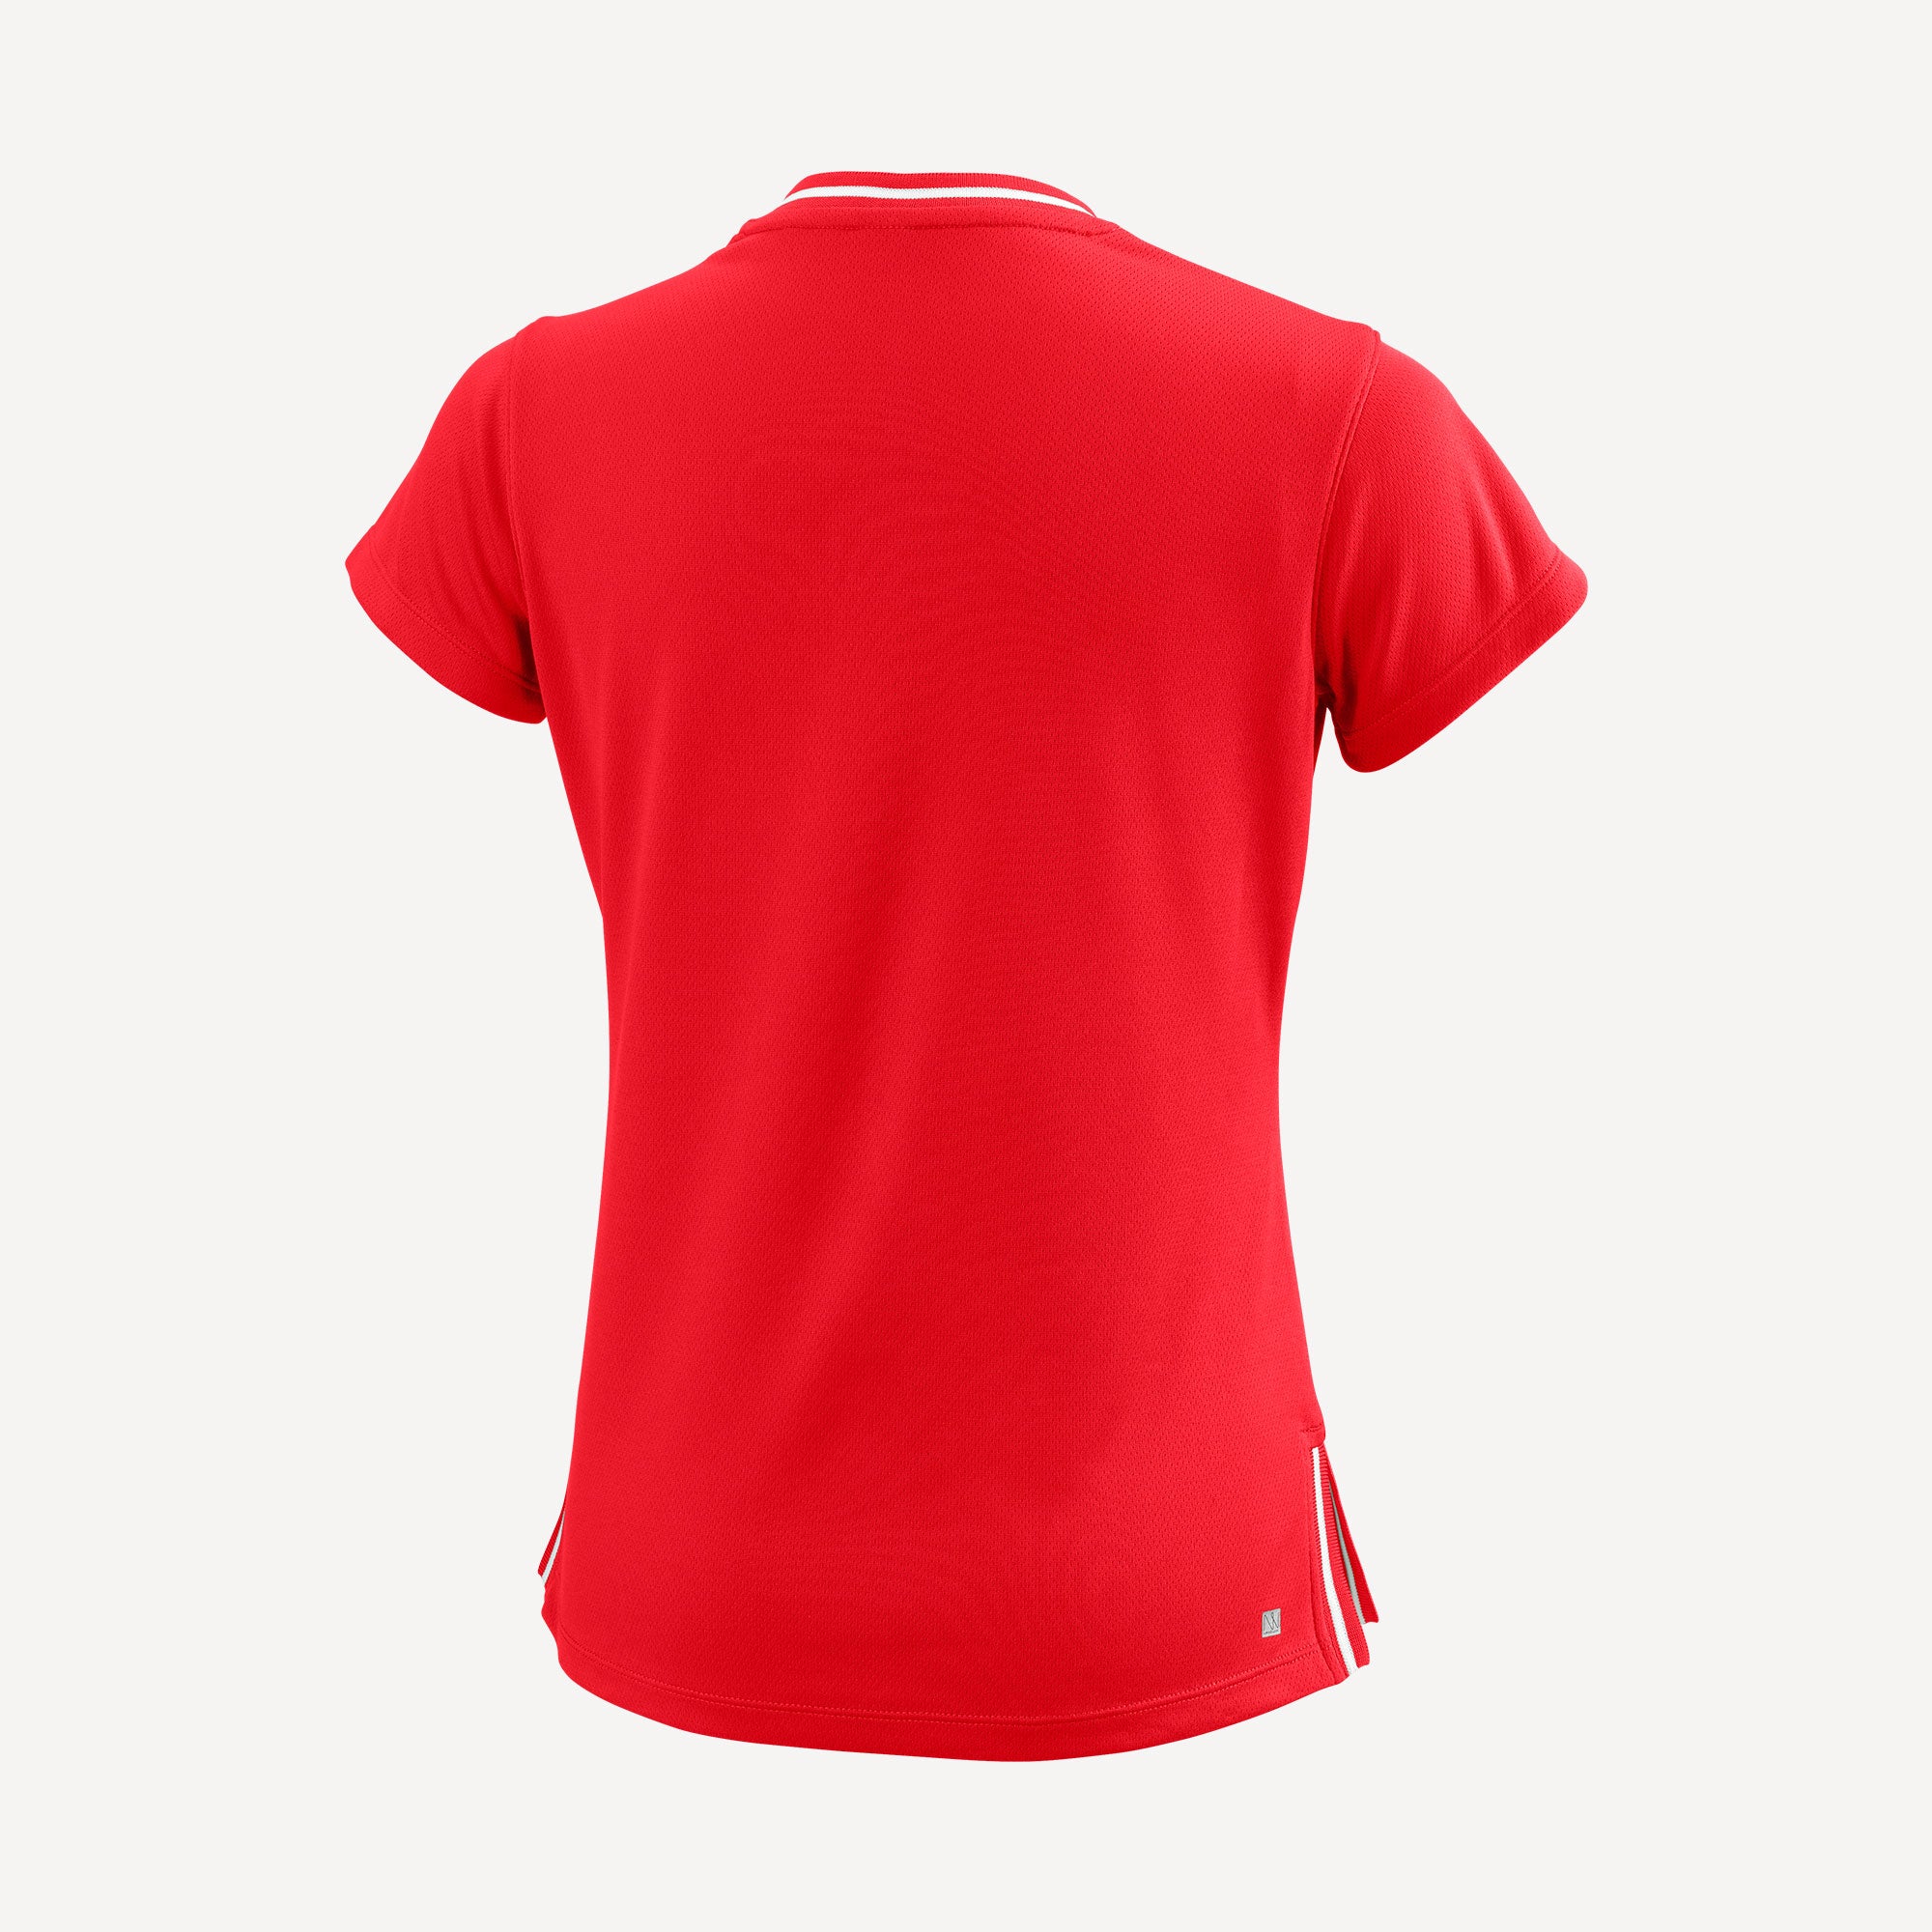 Wilson Team 2 Girls' V-Neck Tennis Shirt Red (2)